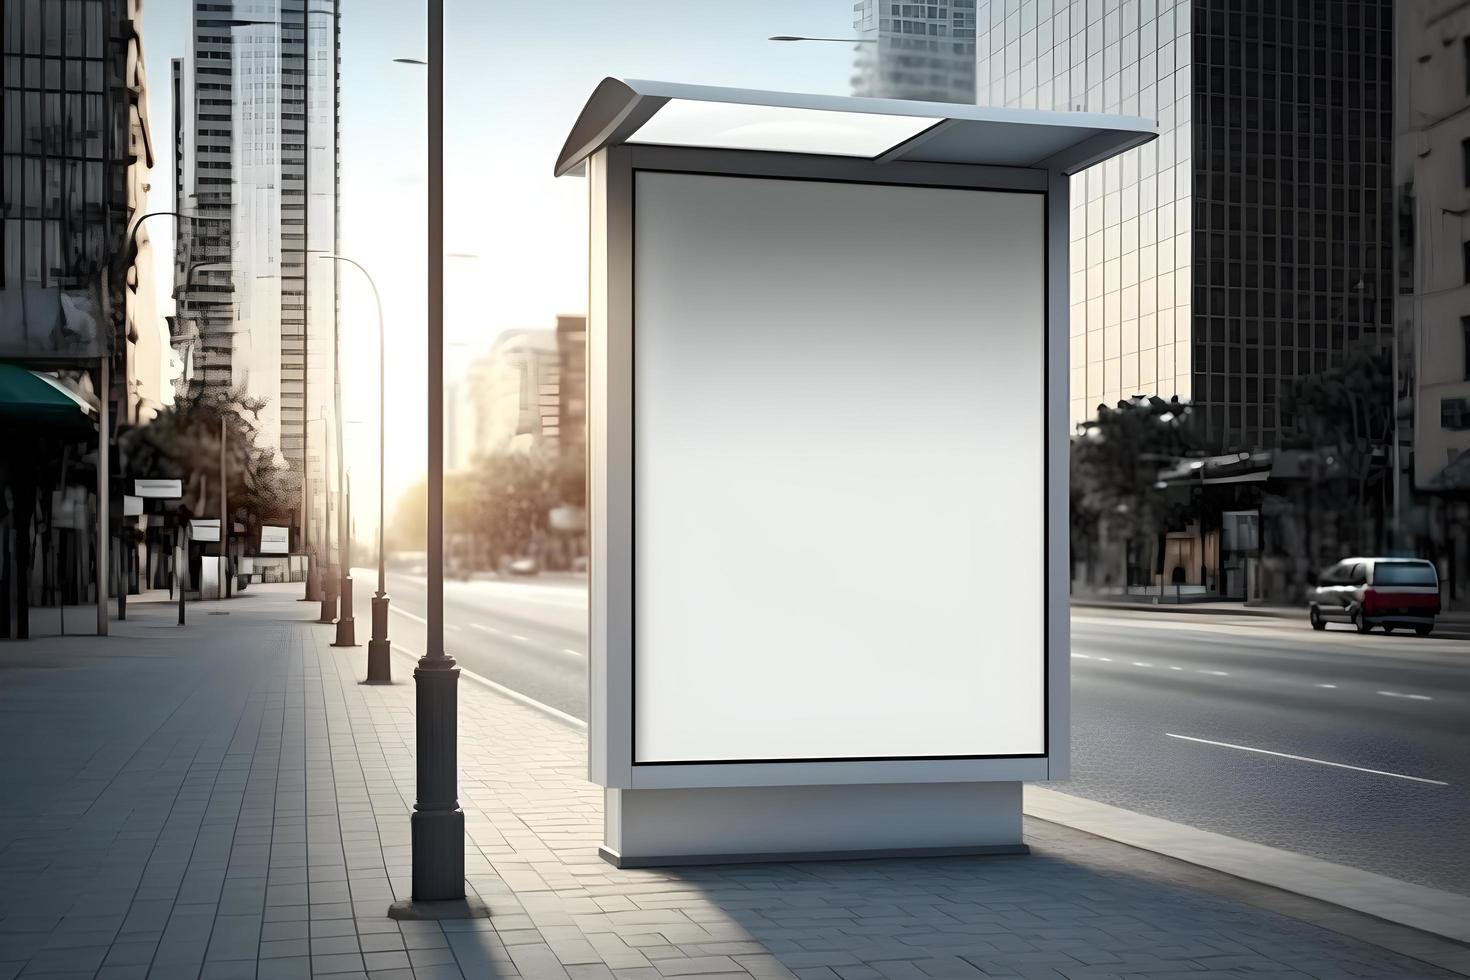 Empty space advertisement board, blank white signboard on roadside in city. Free Photo